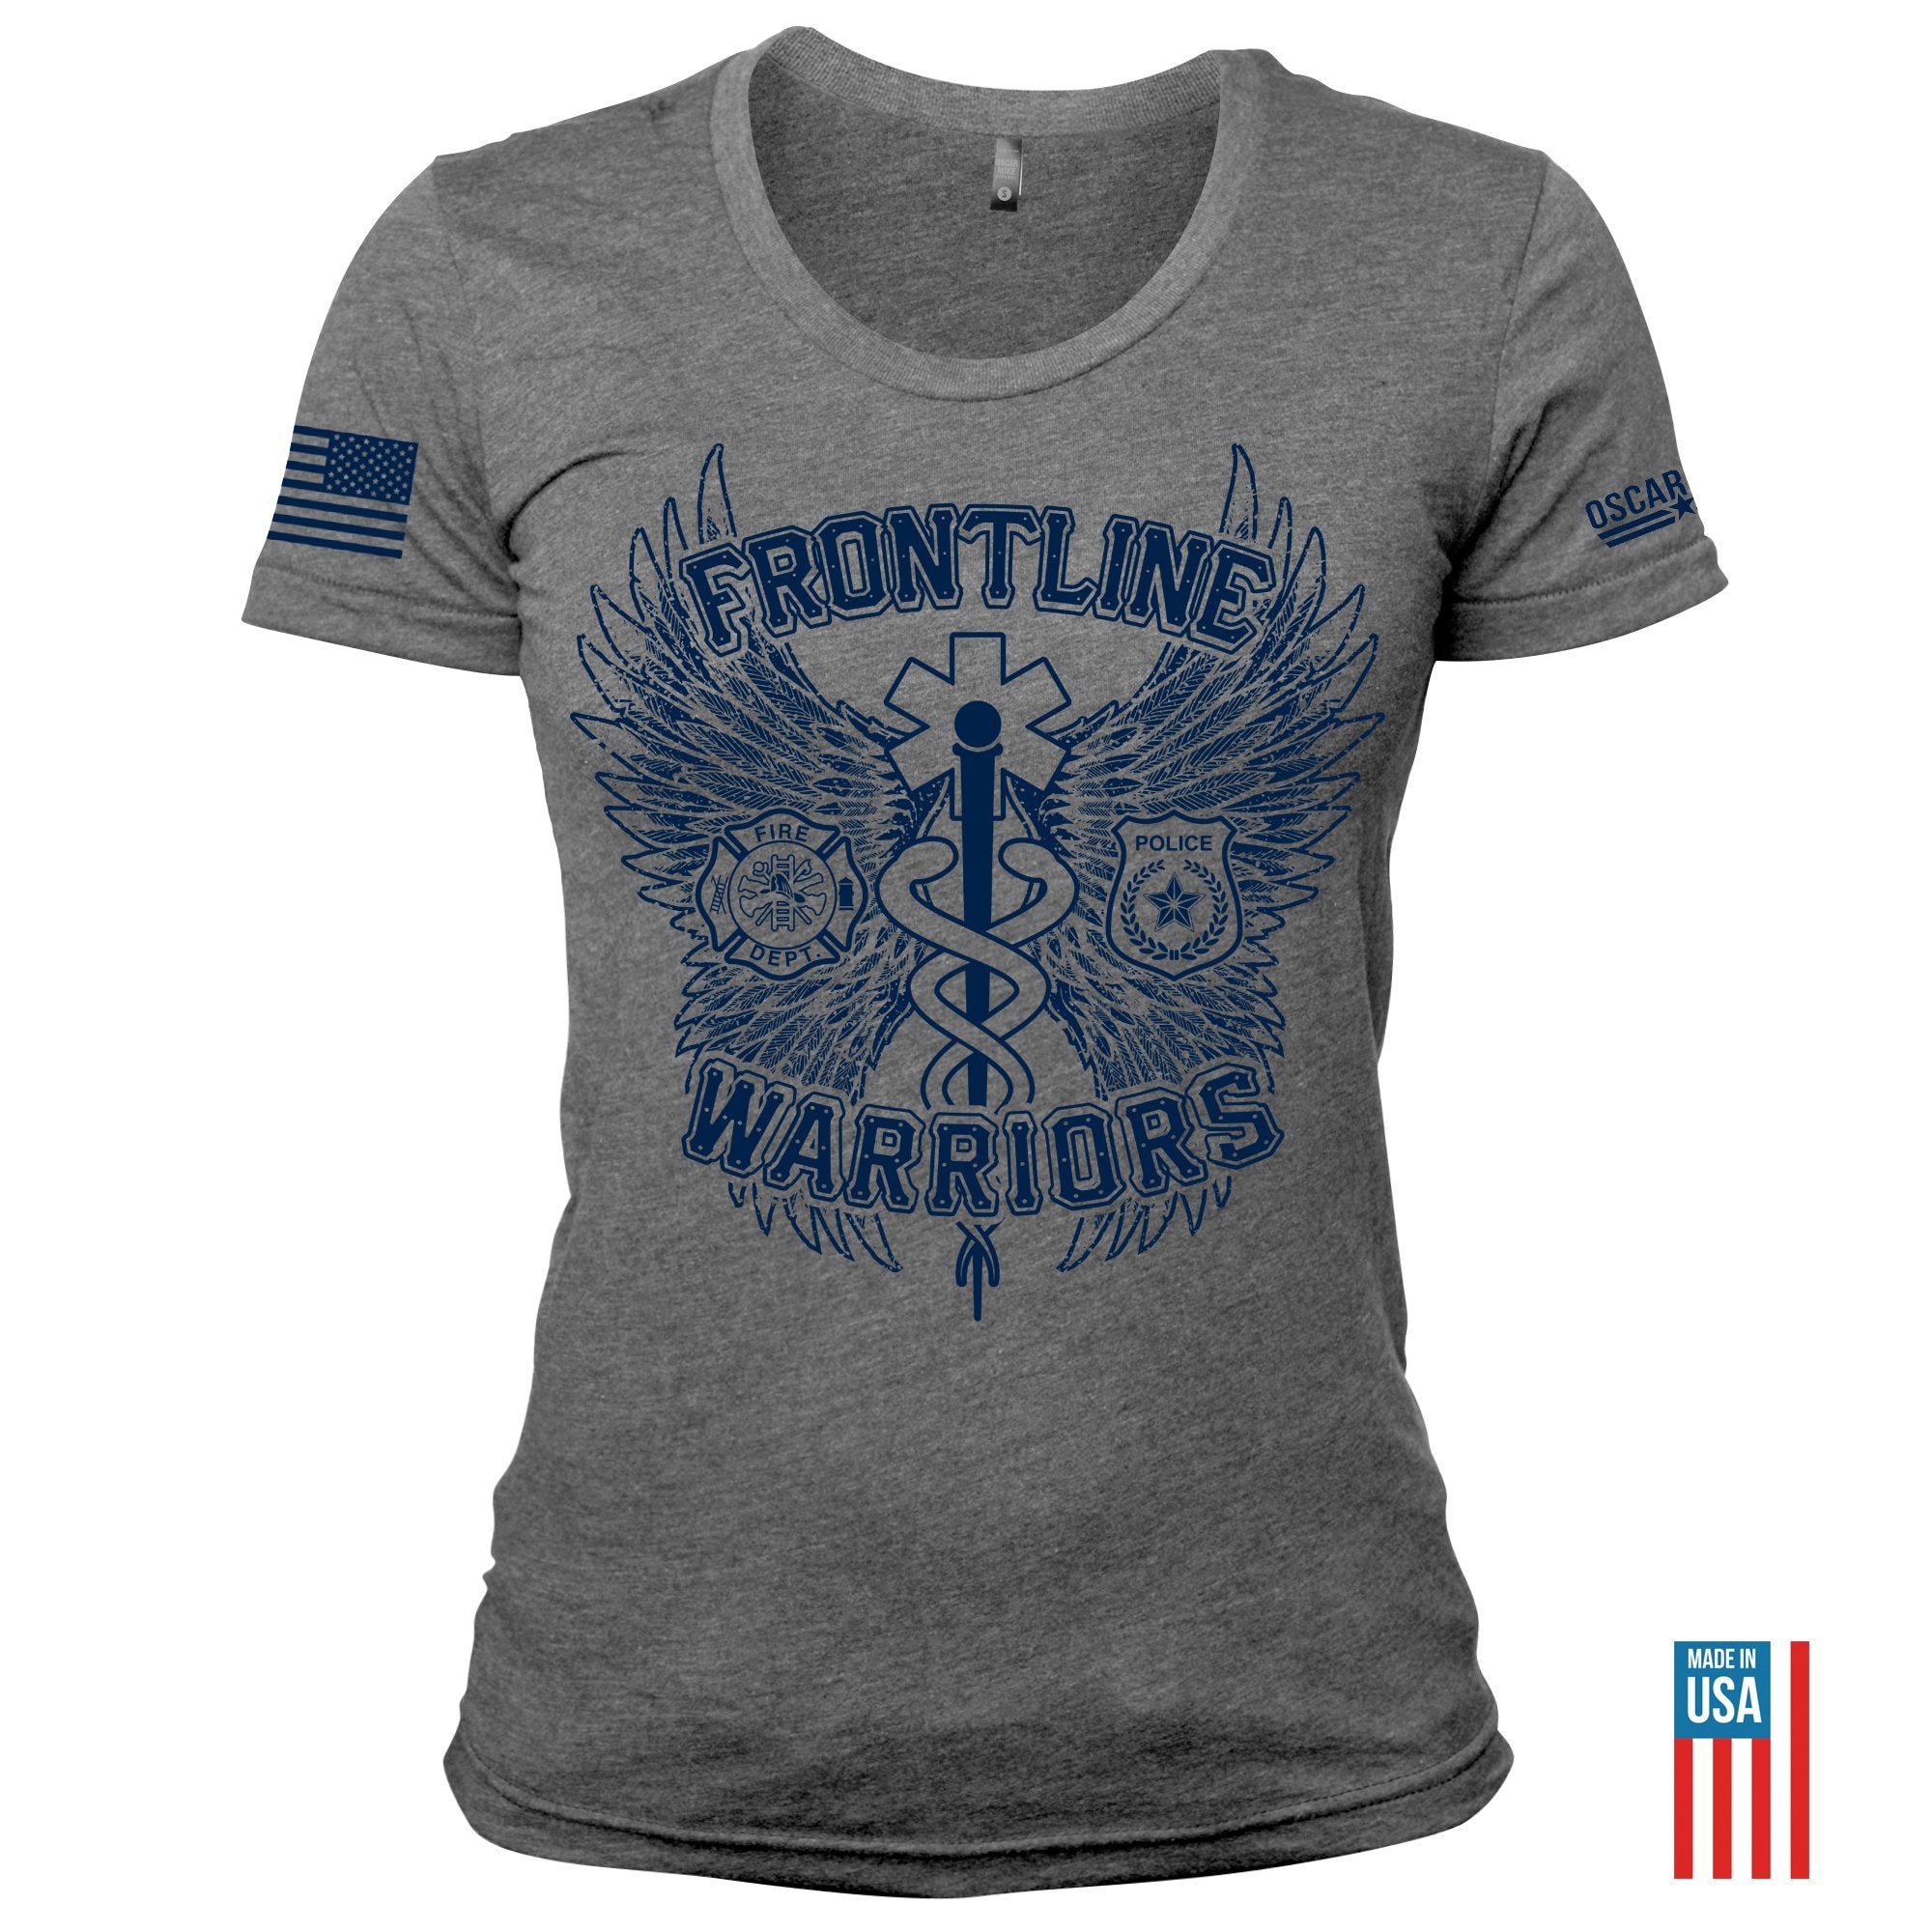 Women's Frontline Warriors T-Shirt from Oscar Mike Apparel